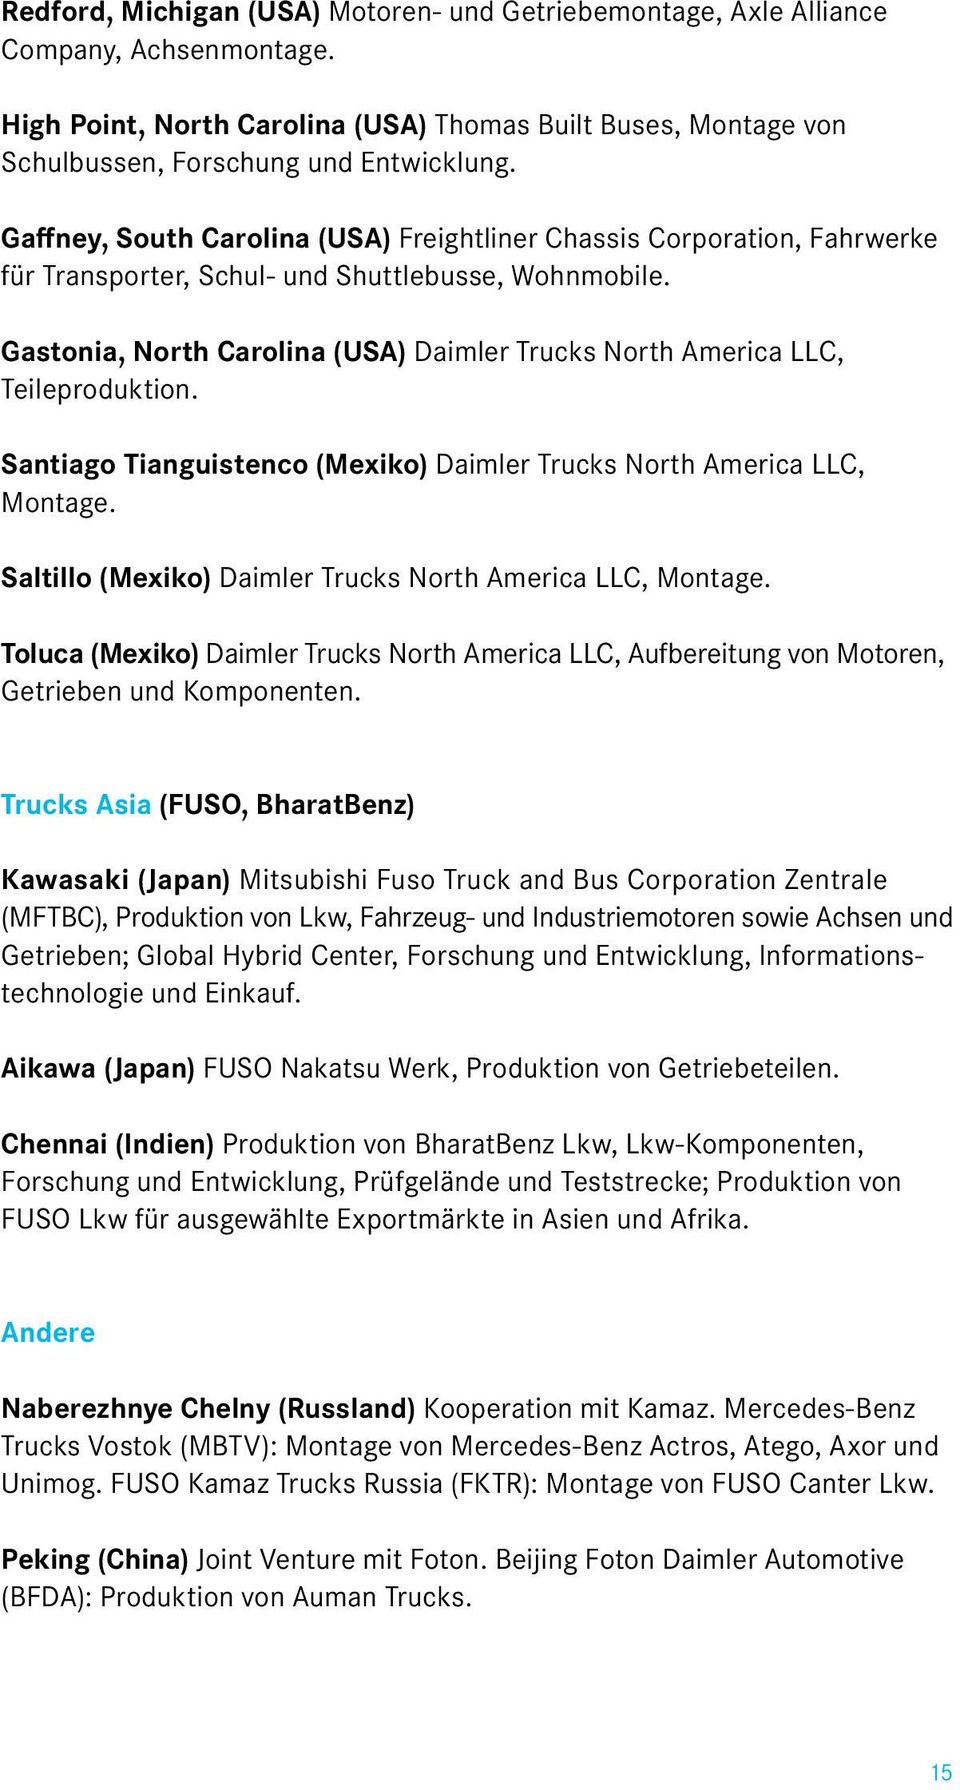 Gastonia, North Carolina (USA) Daimler Trucks North America LLC, Teileproduktion. Santiago Tianguistenco (Mexiko) Daimler Trucks North America LLC, Montage.